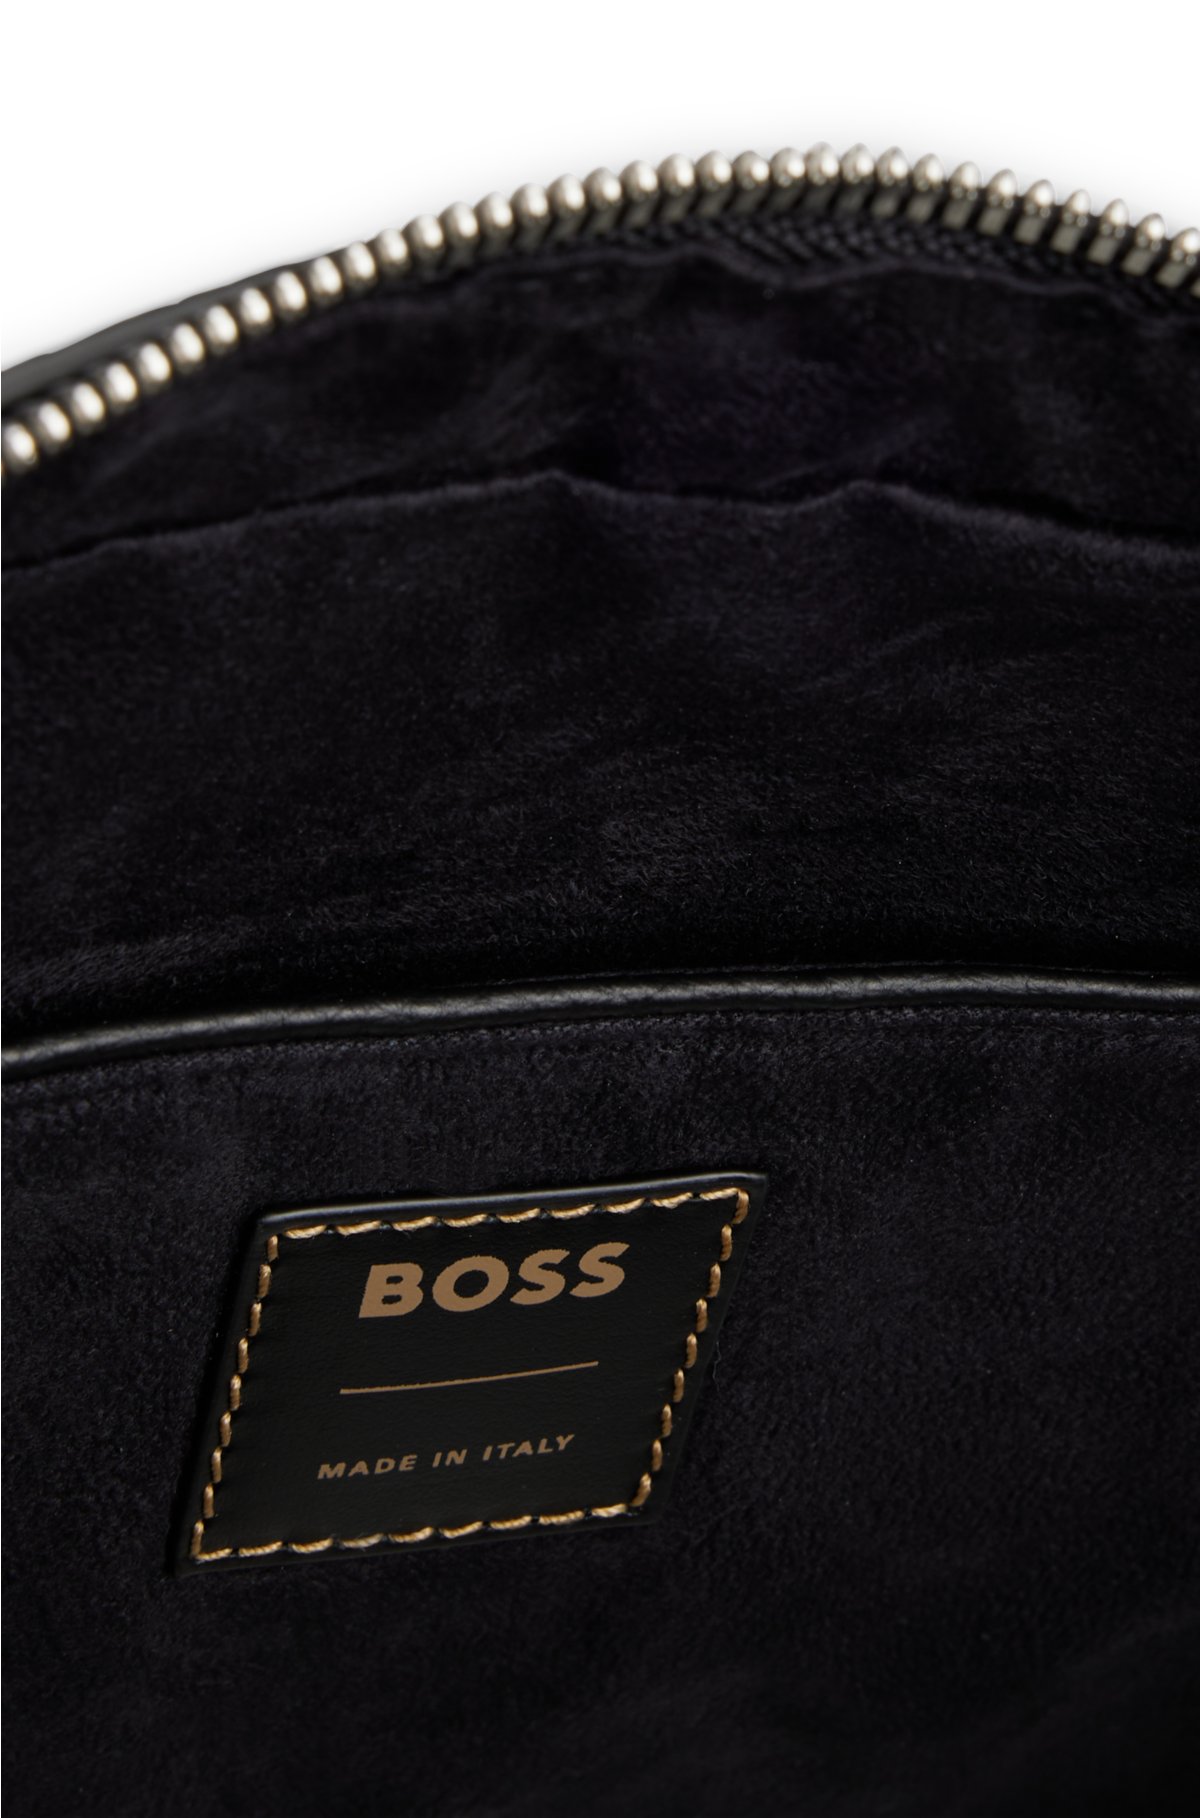 BOSS - Porte-documents en cuir italien à logo embossé